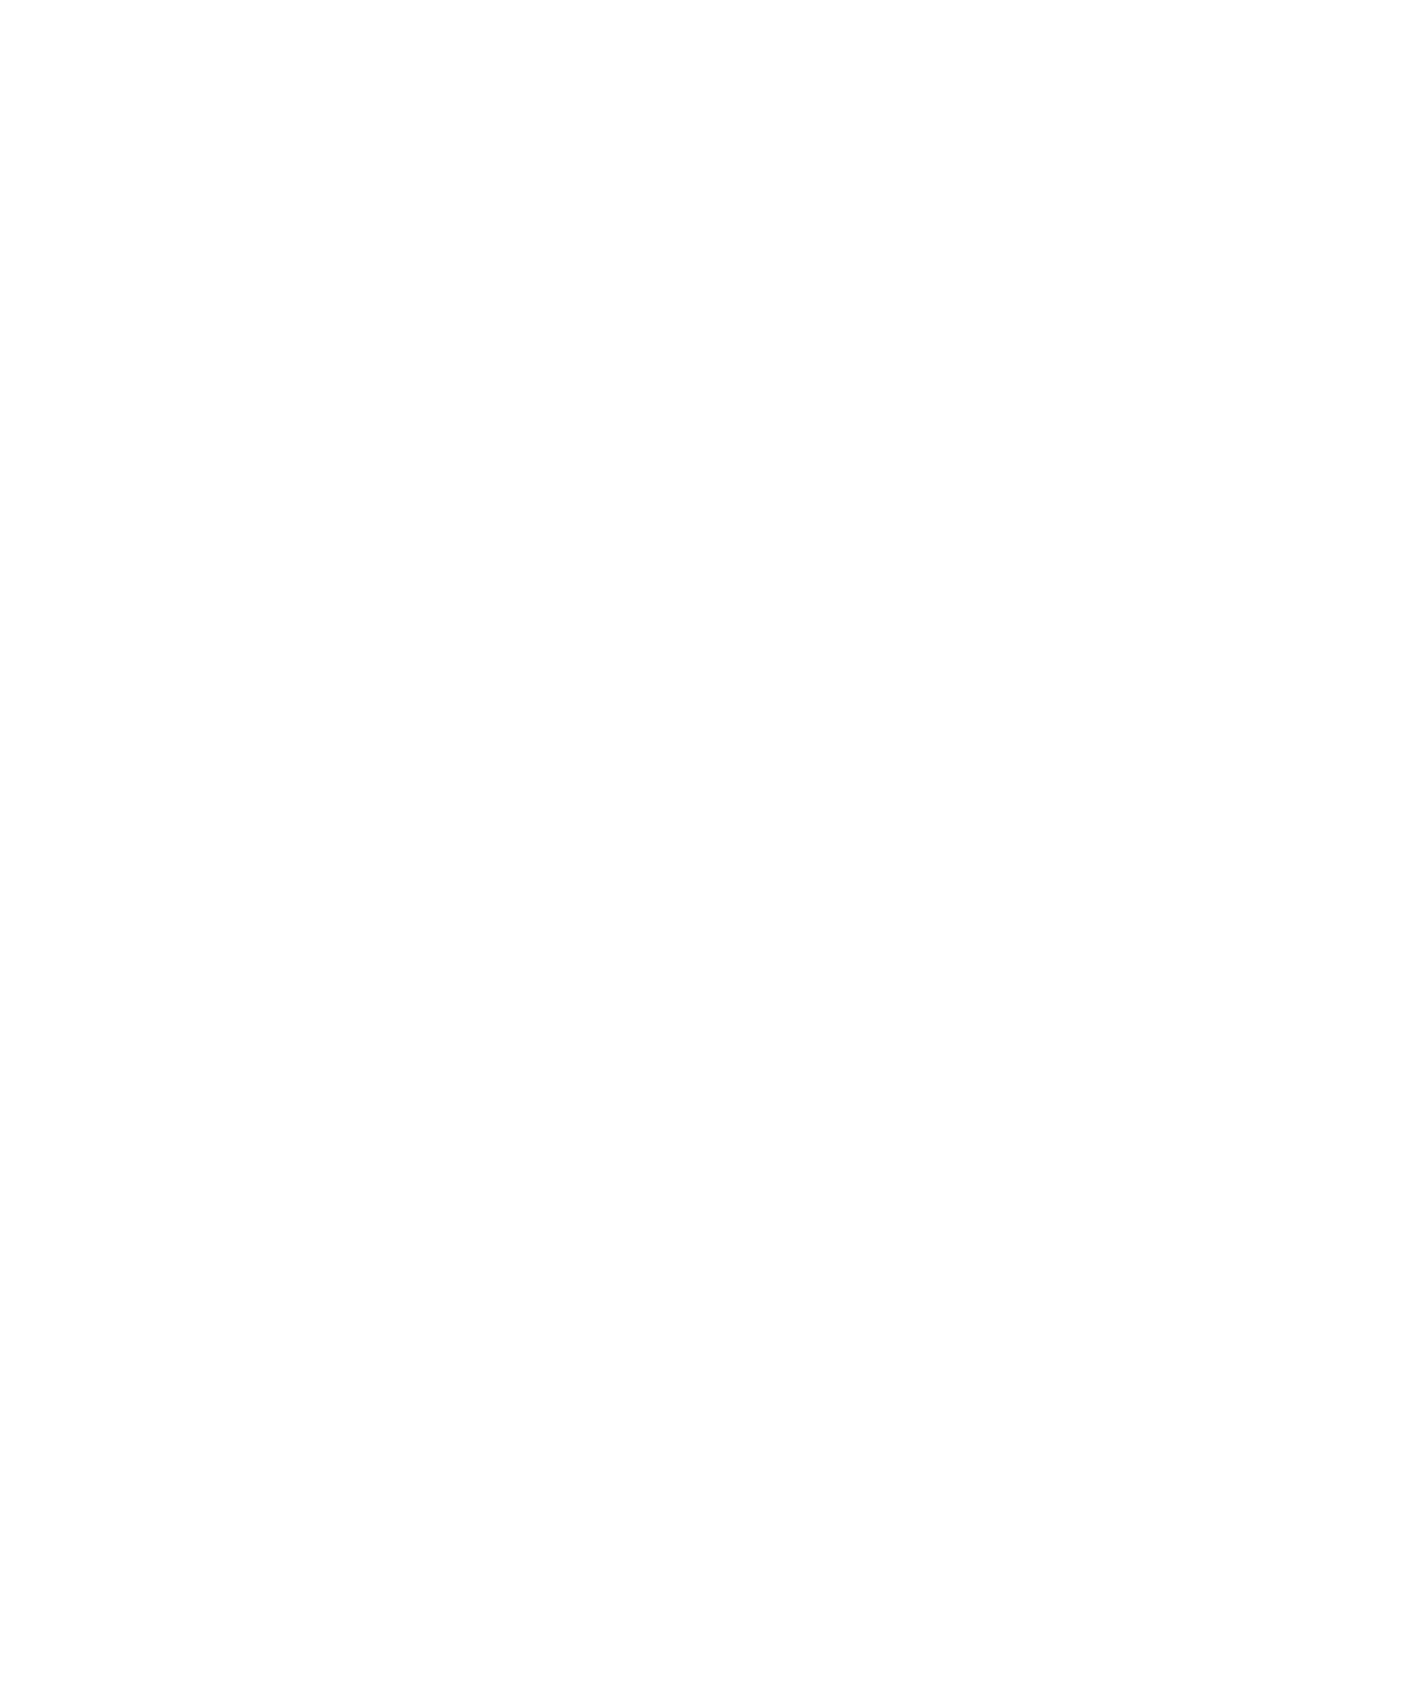 BERGFESTTROMMLER